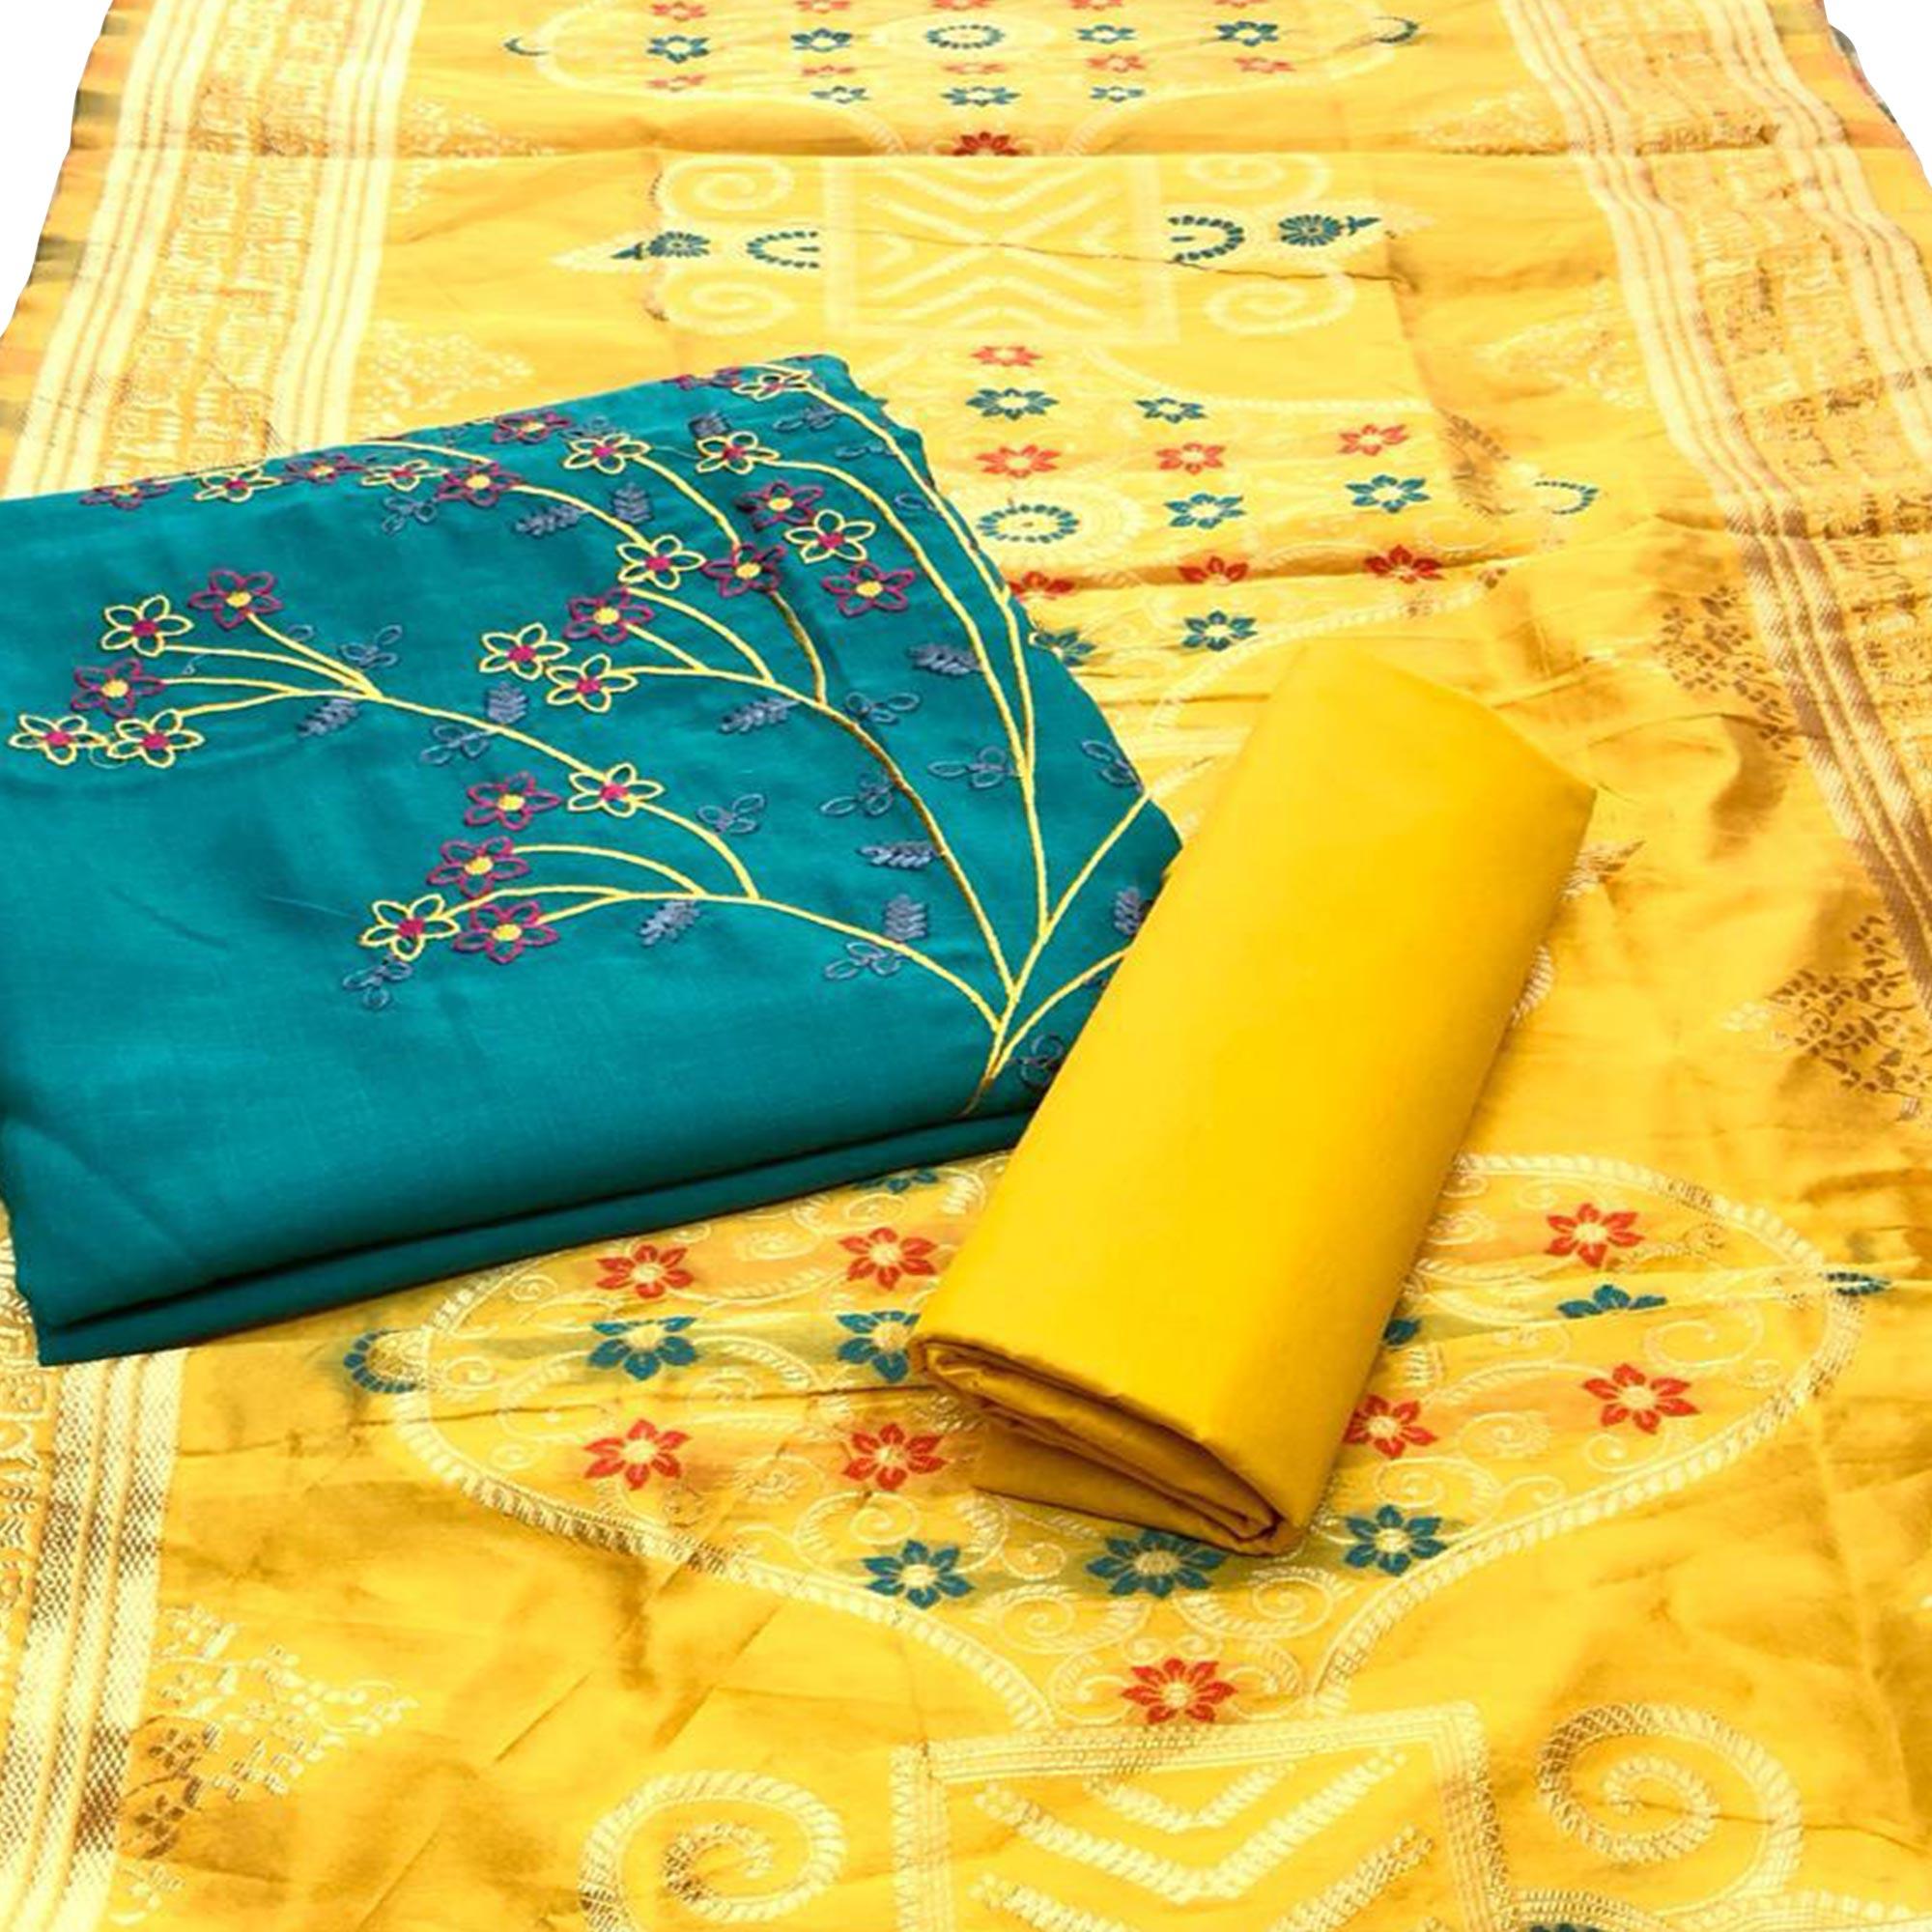 Ideal Aqua Green Colored Casual Wear Embroidered Cotton Dress Material With Banarasi Silk Dupatta - Peachmode